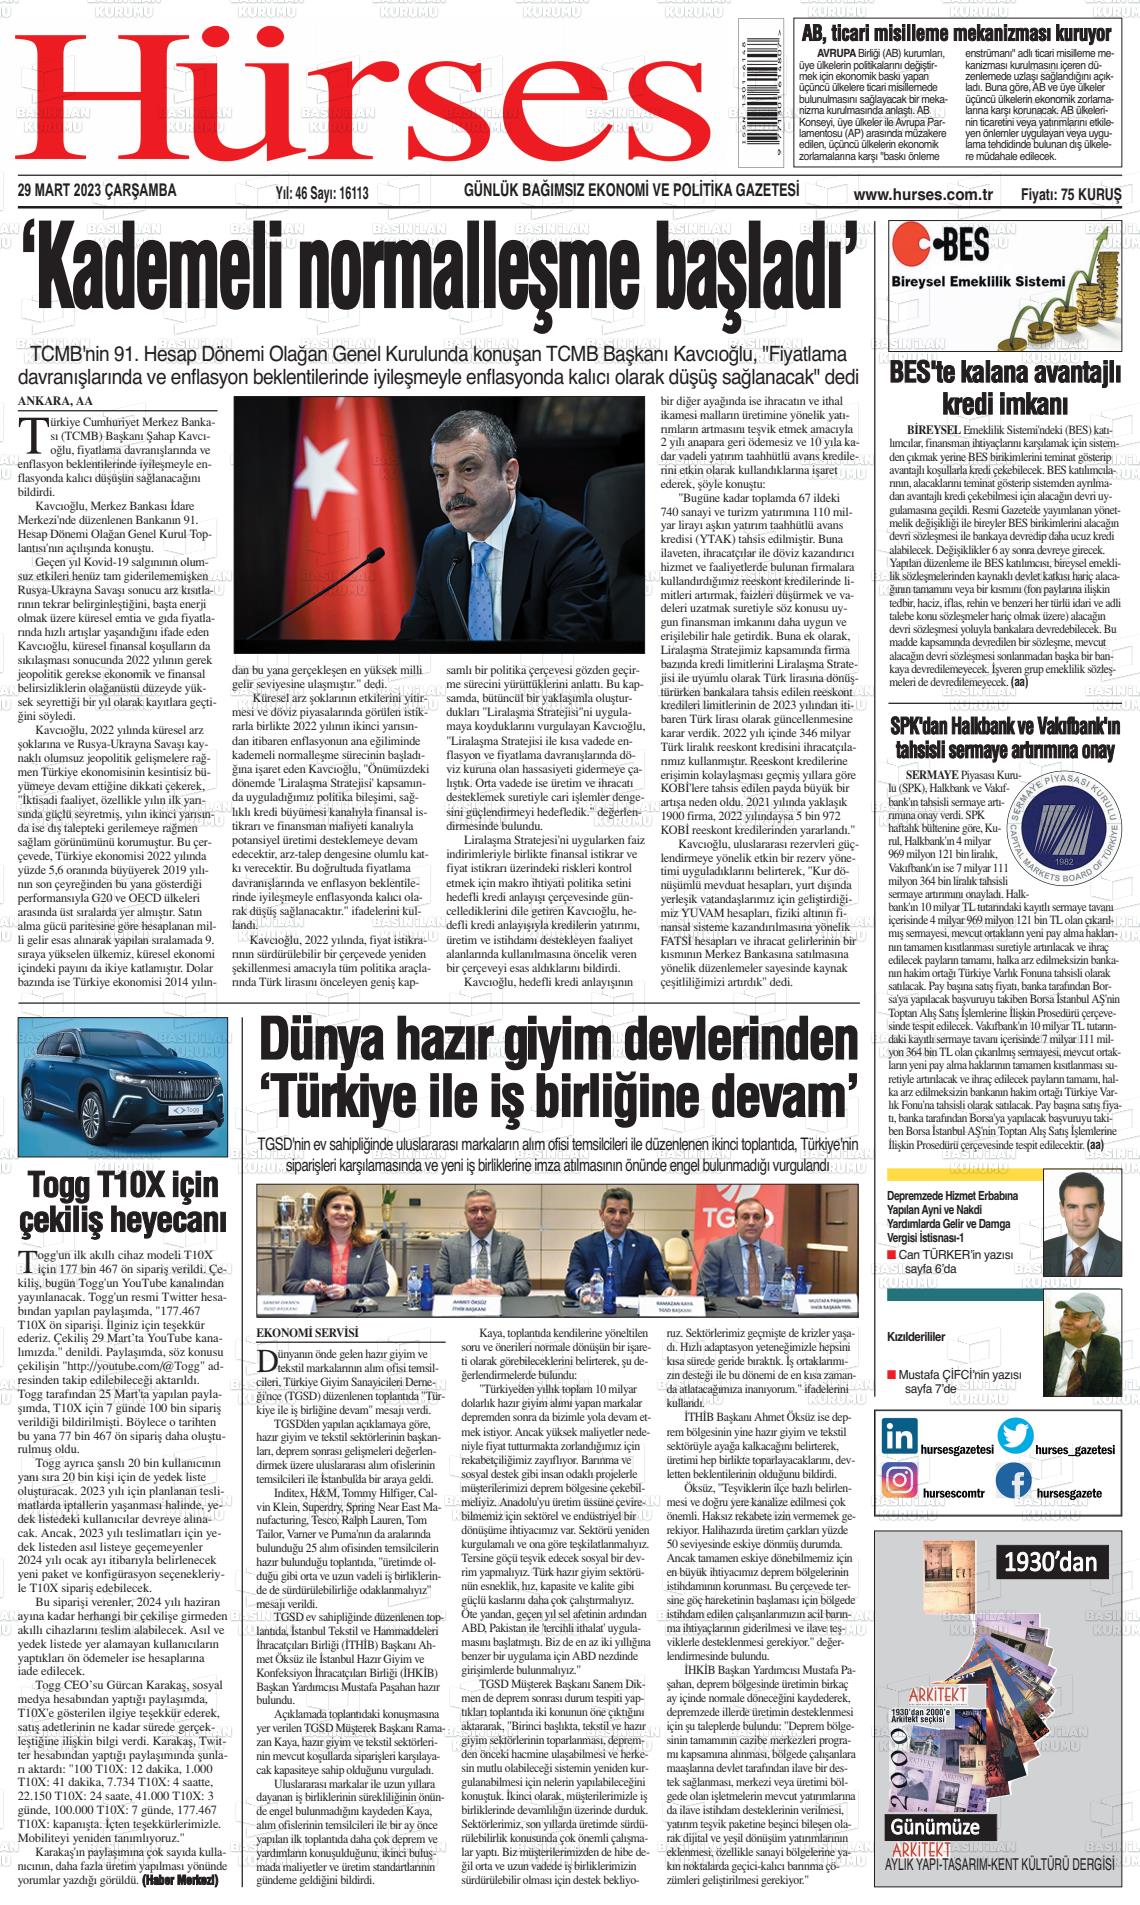 29 Mart 2023 İstanbul Hürses gazetesi Gazete Manşeti